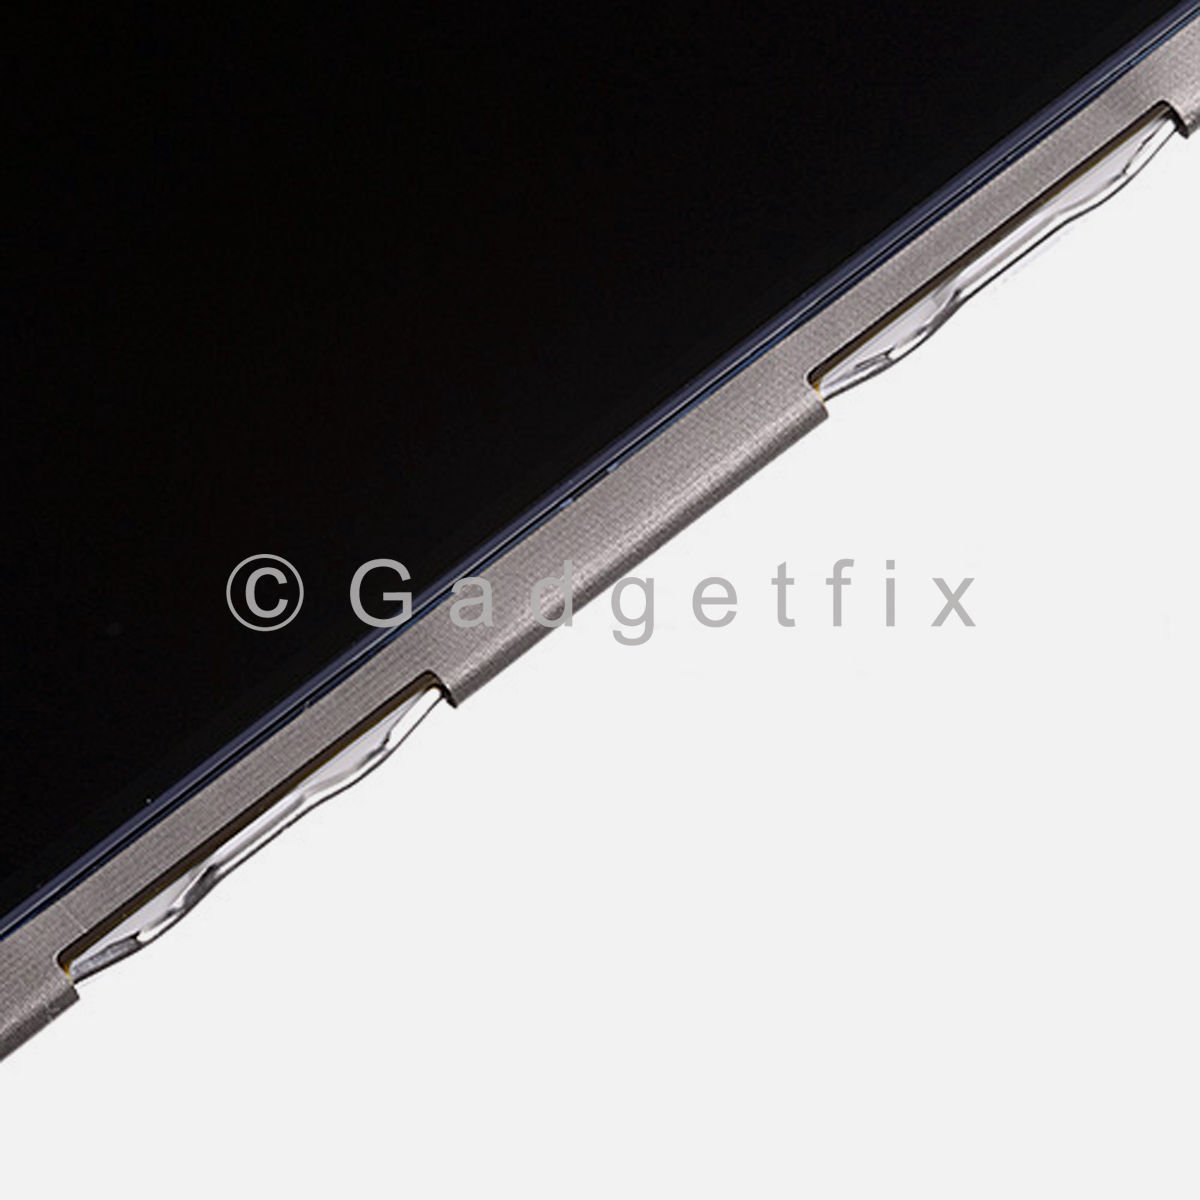 LCD Screen Display For Samsung Galaxy TAB 2 7.0 P3100 P3110 P3113 